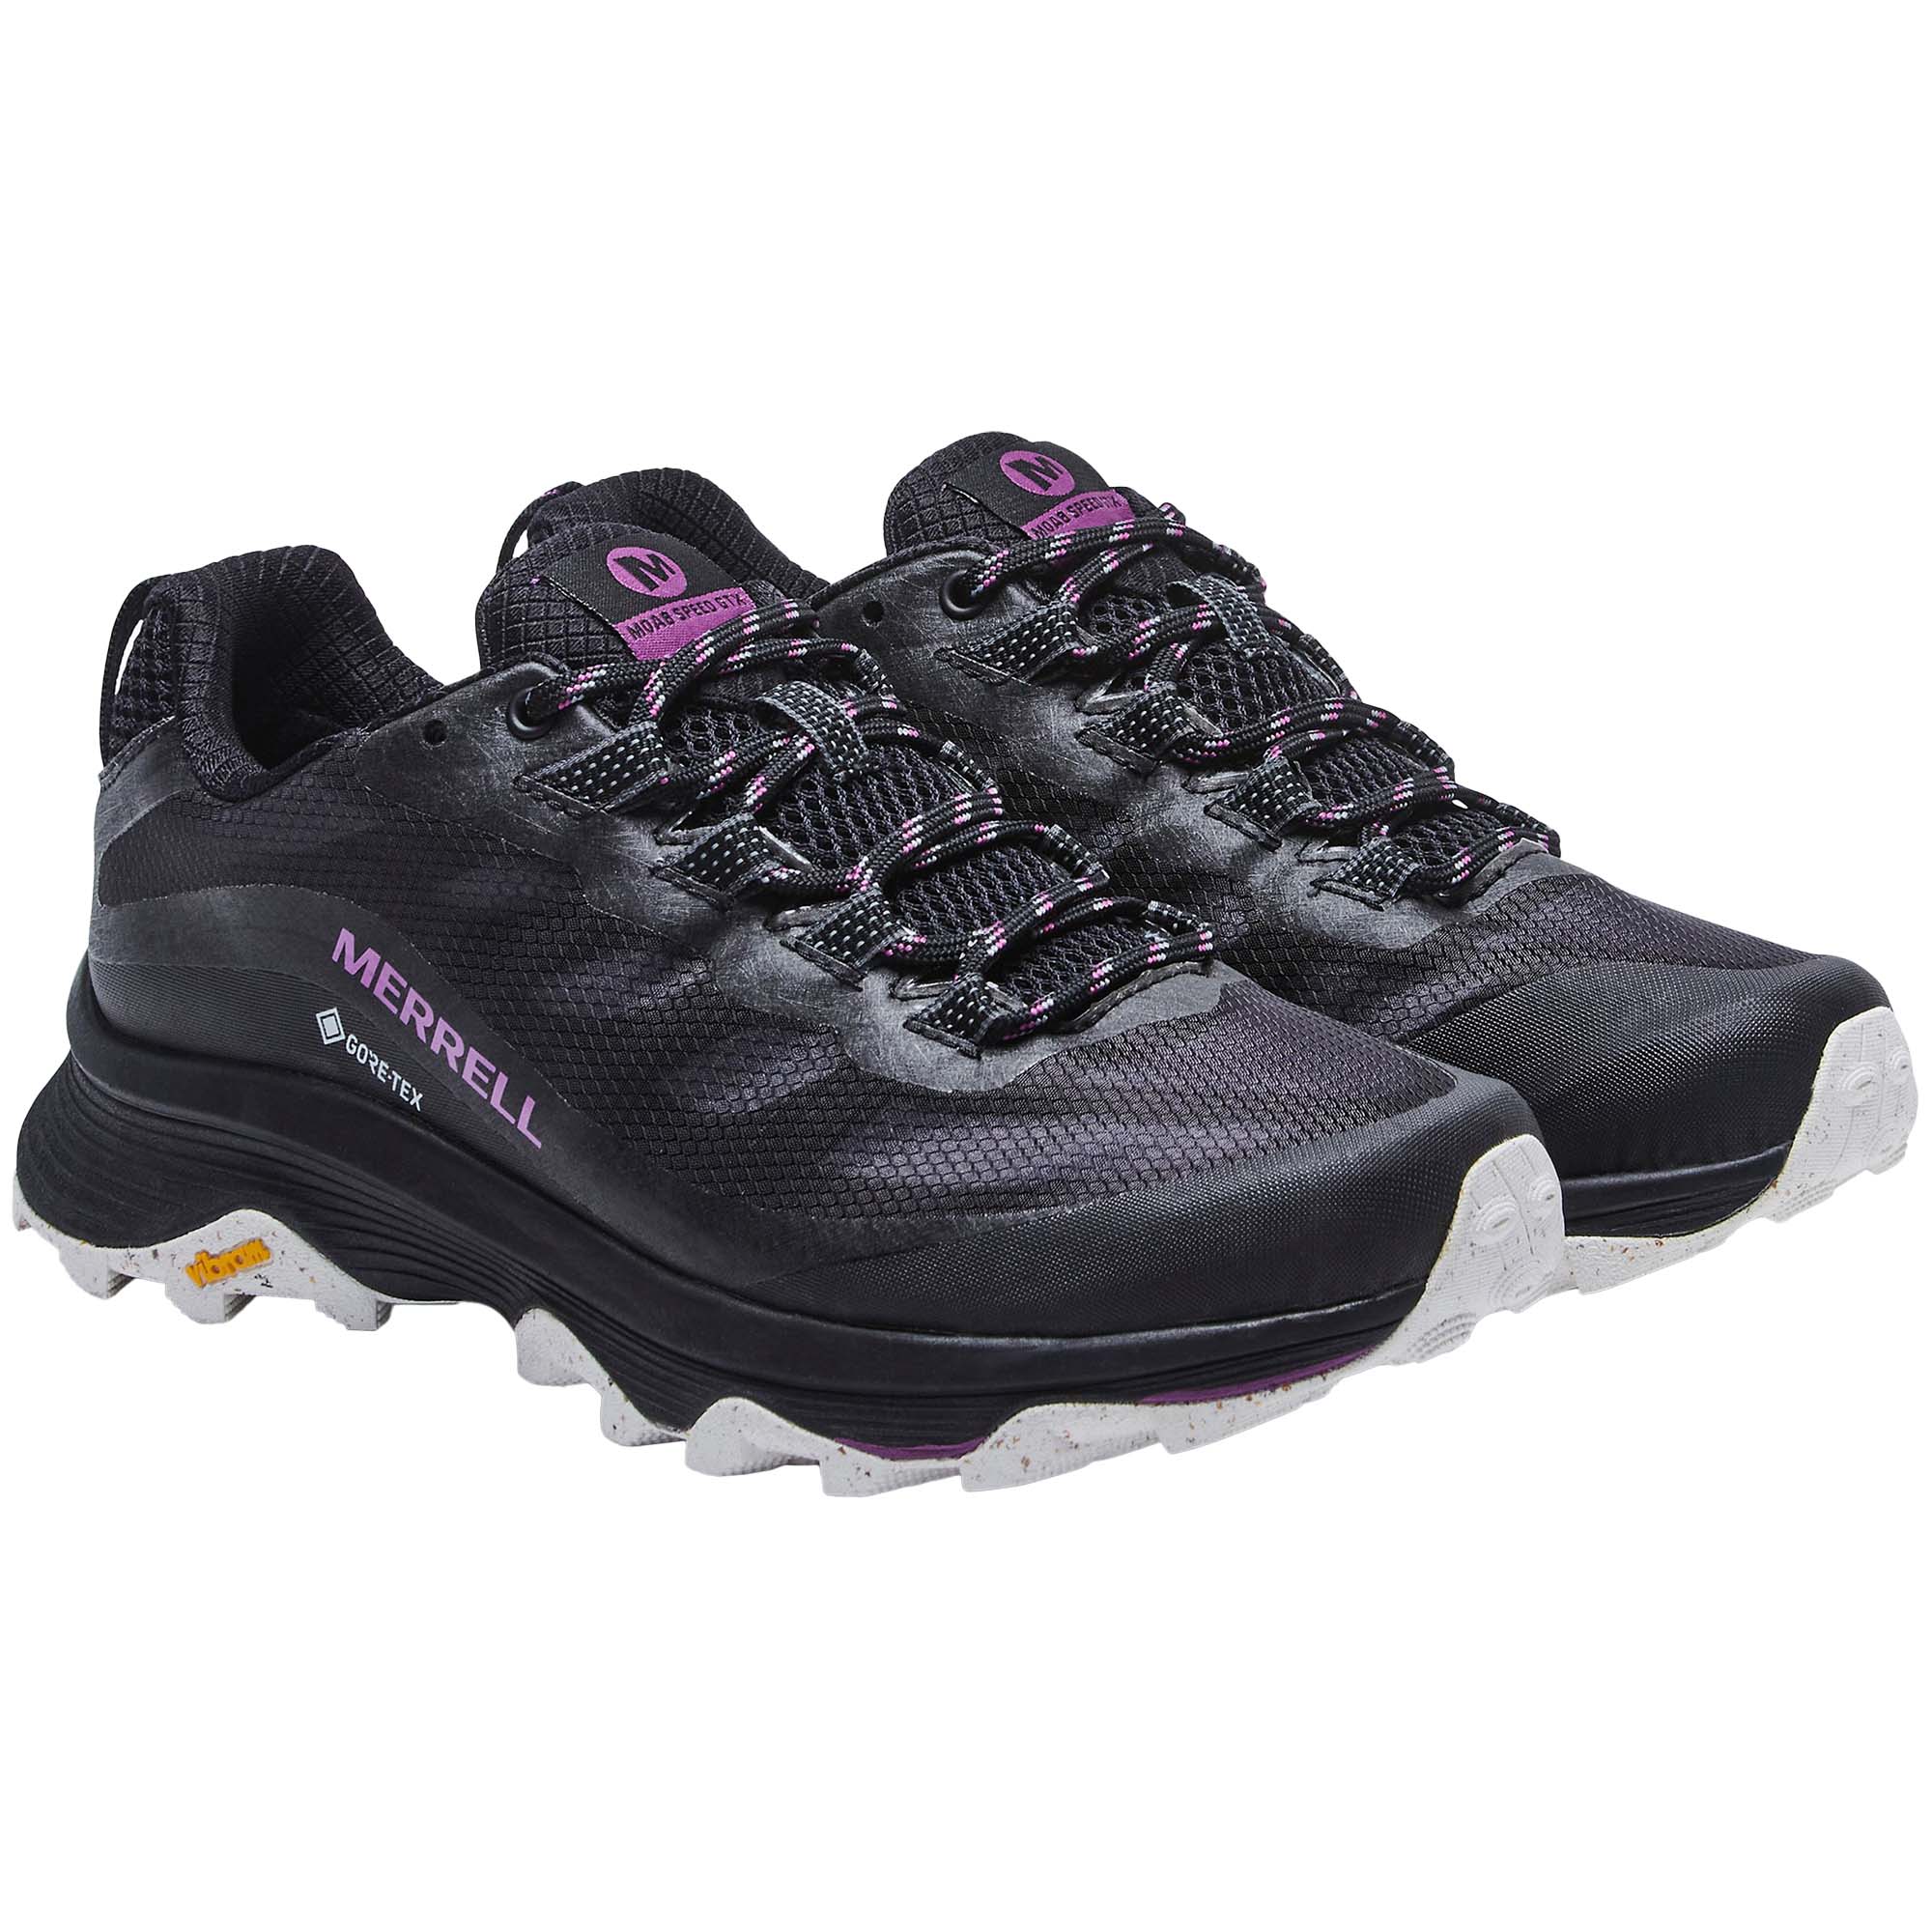 Merrell Moab Speed GTX Women's Hiking Shoes